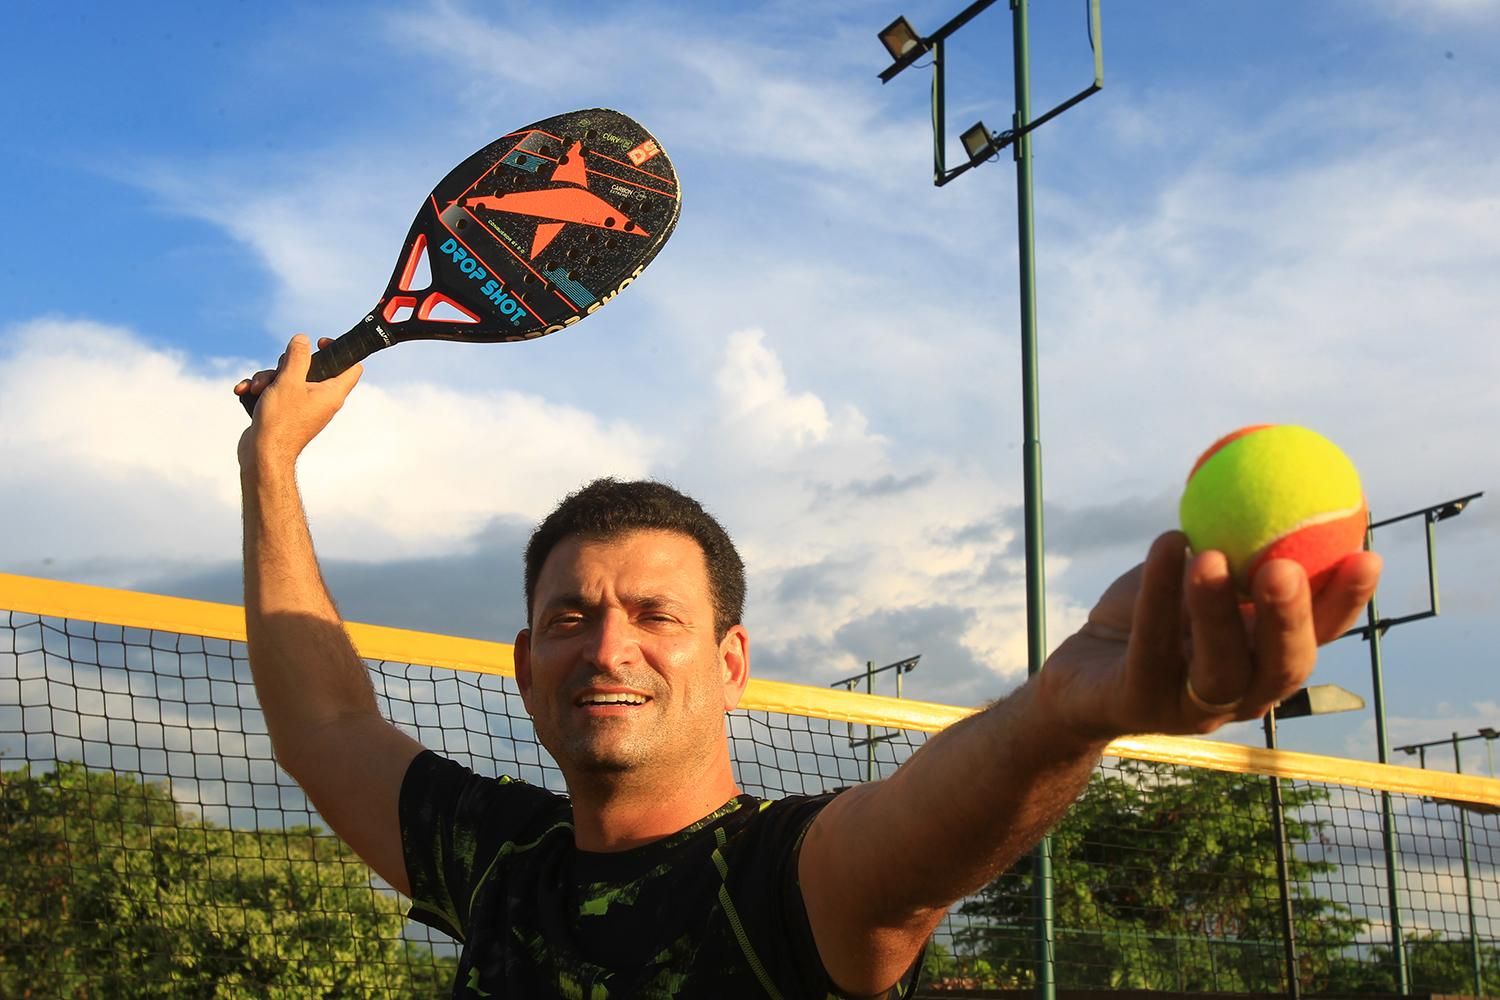 Entenda como jogar tênis ajuda o corpo e a mente 